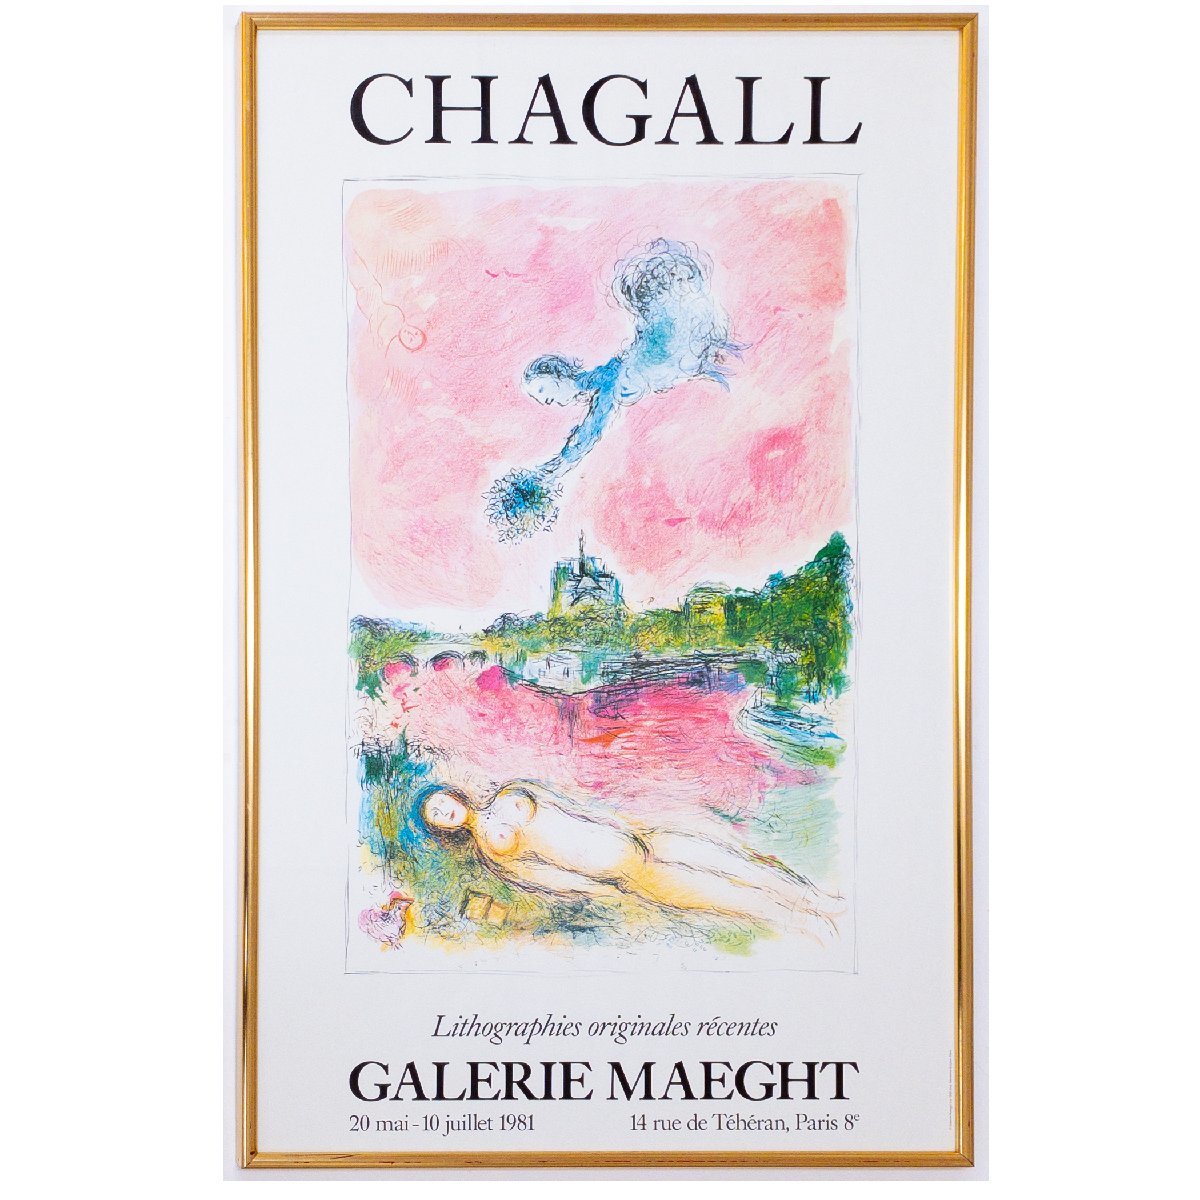 【SHIN】マルク・シャガール 1981年マーグ画廊展覧会ポスター 額装 リトグラフポスター Chagall